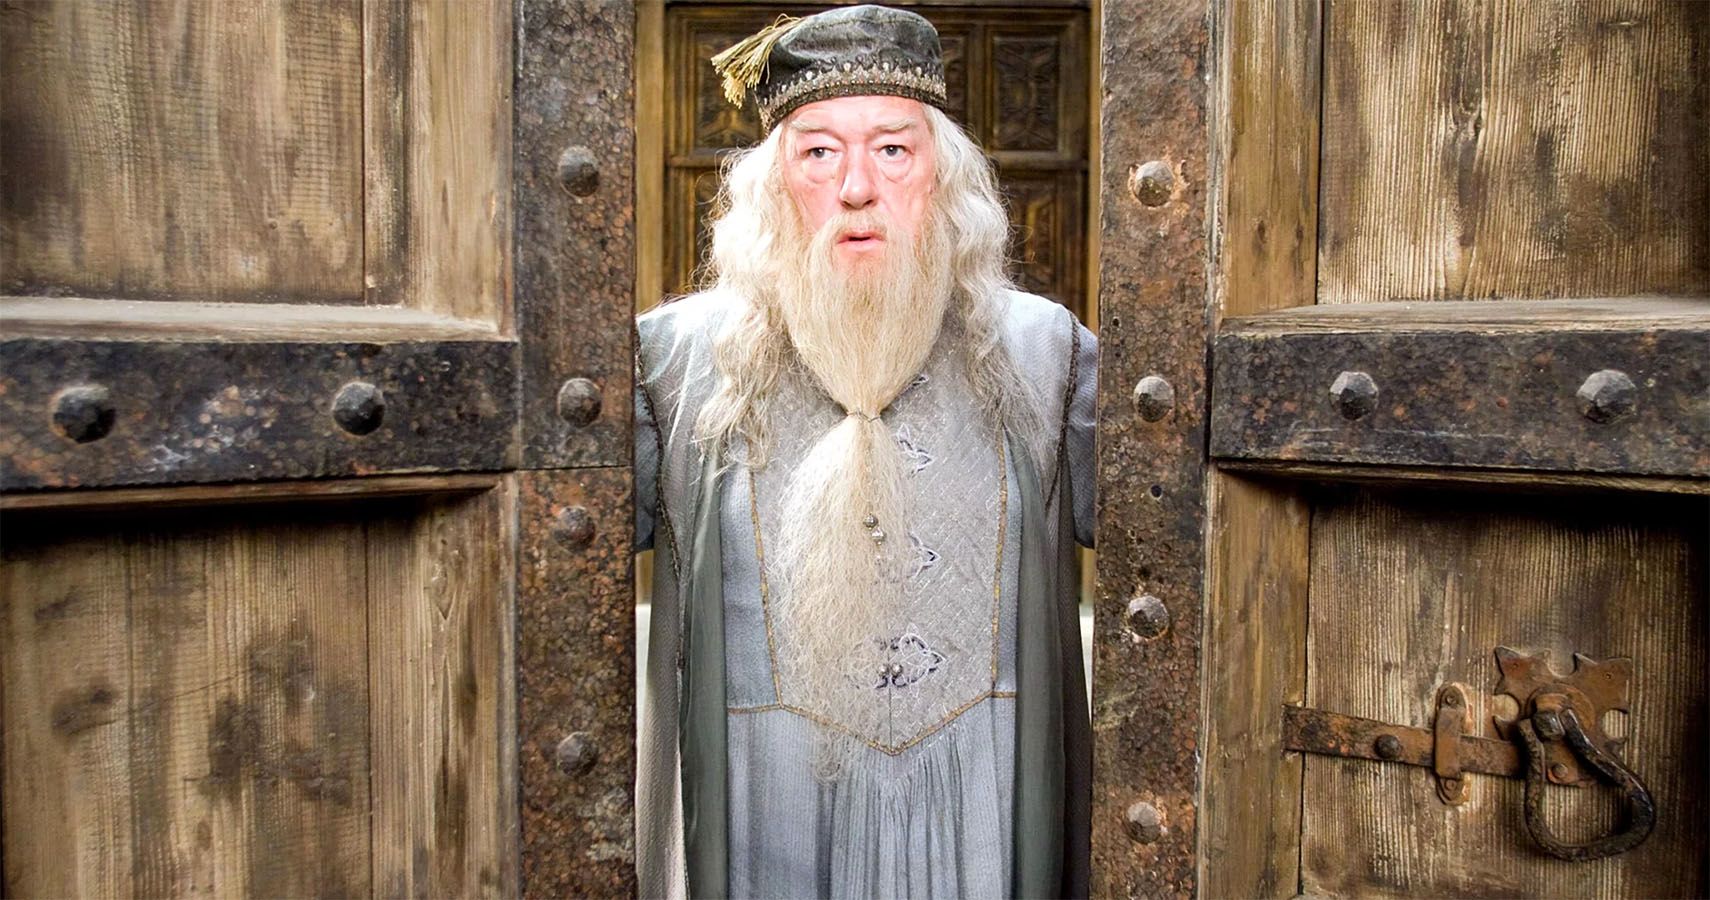 dumbledore potter harry memes logic funny hilarious popsugar